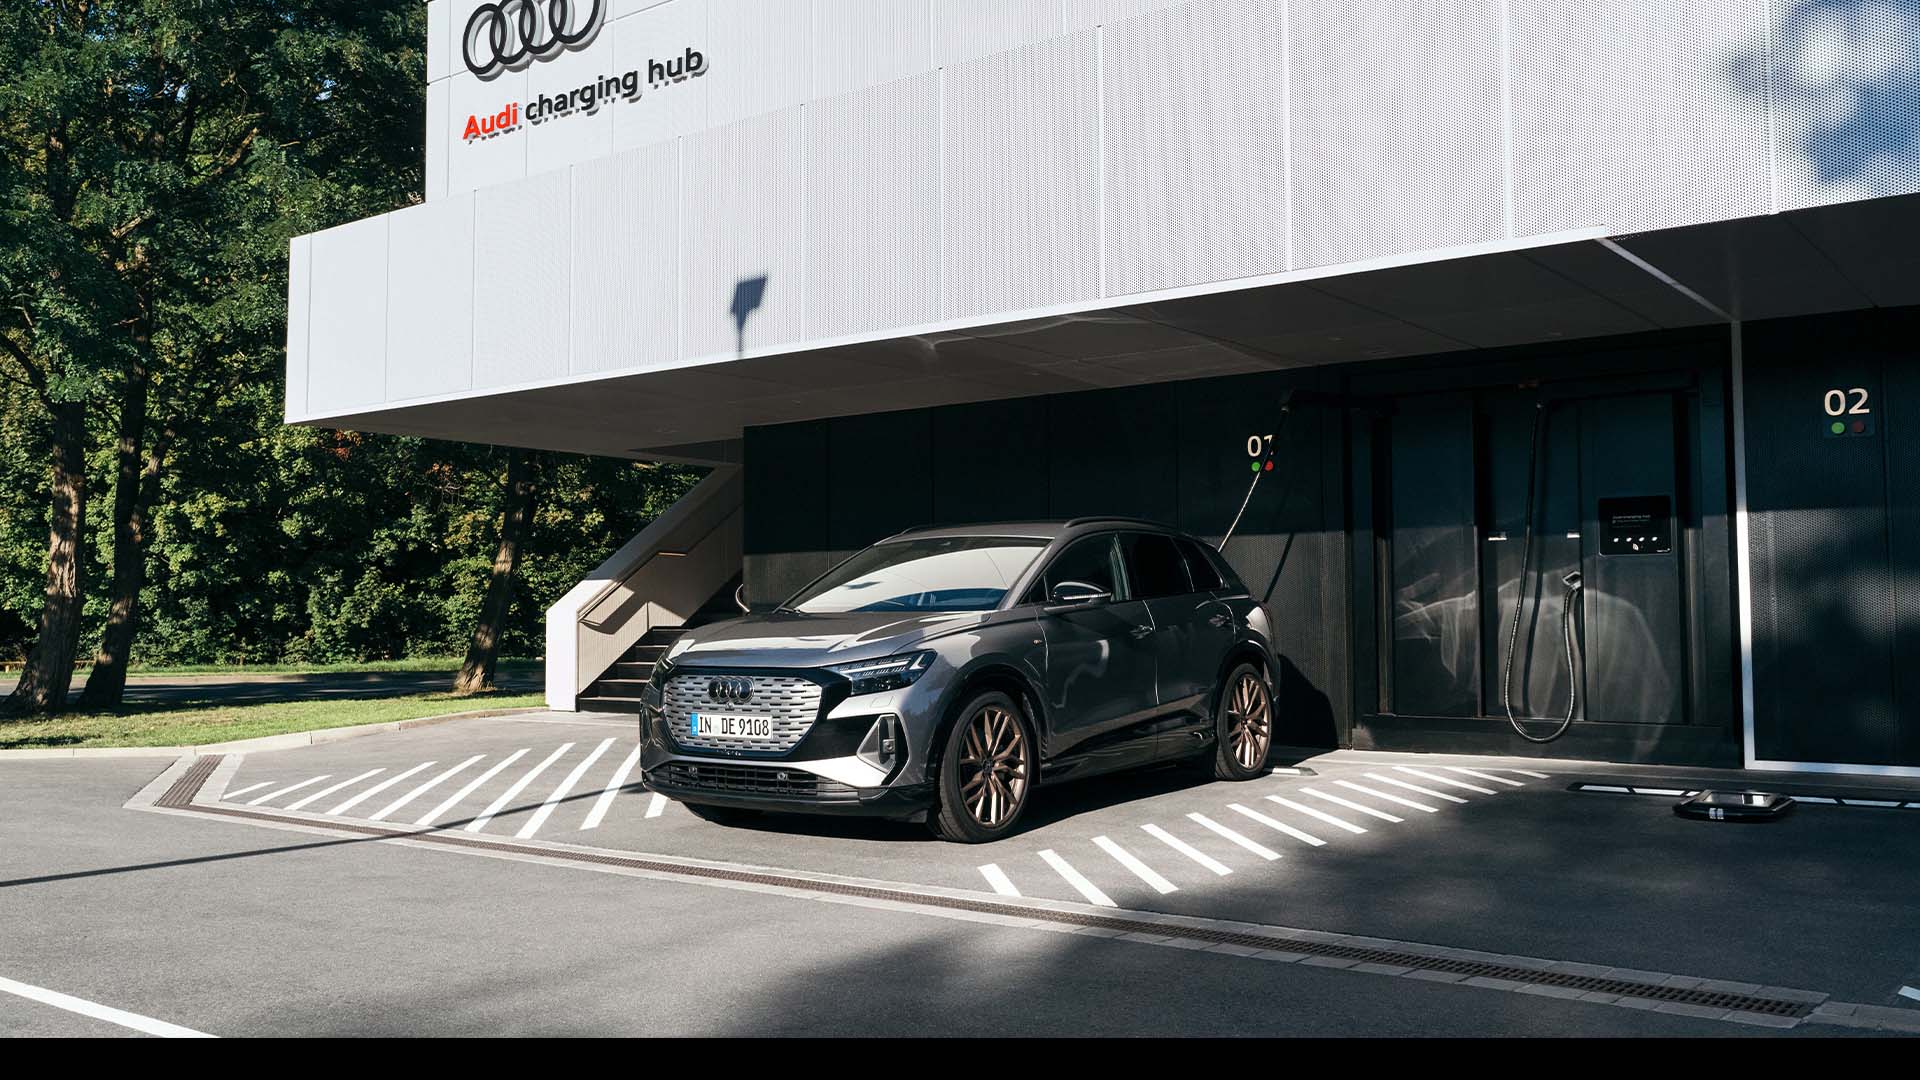 L'Audi Q4 e-tron au Audi charging hub de Nuremberg